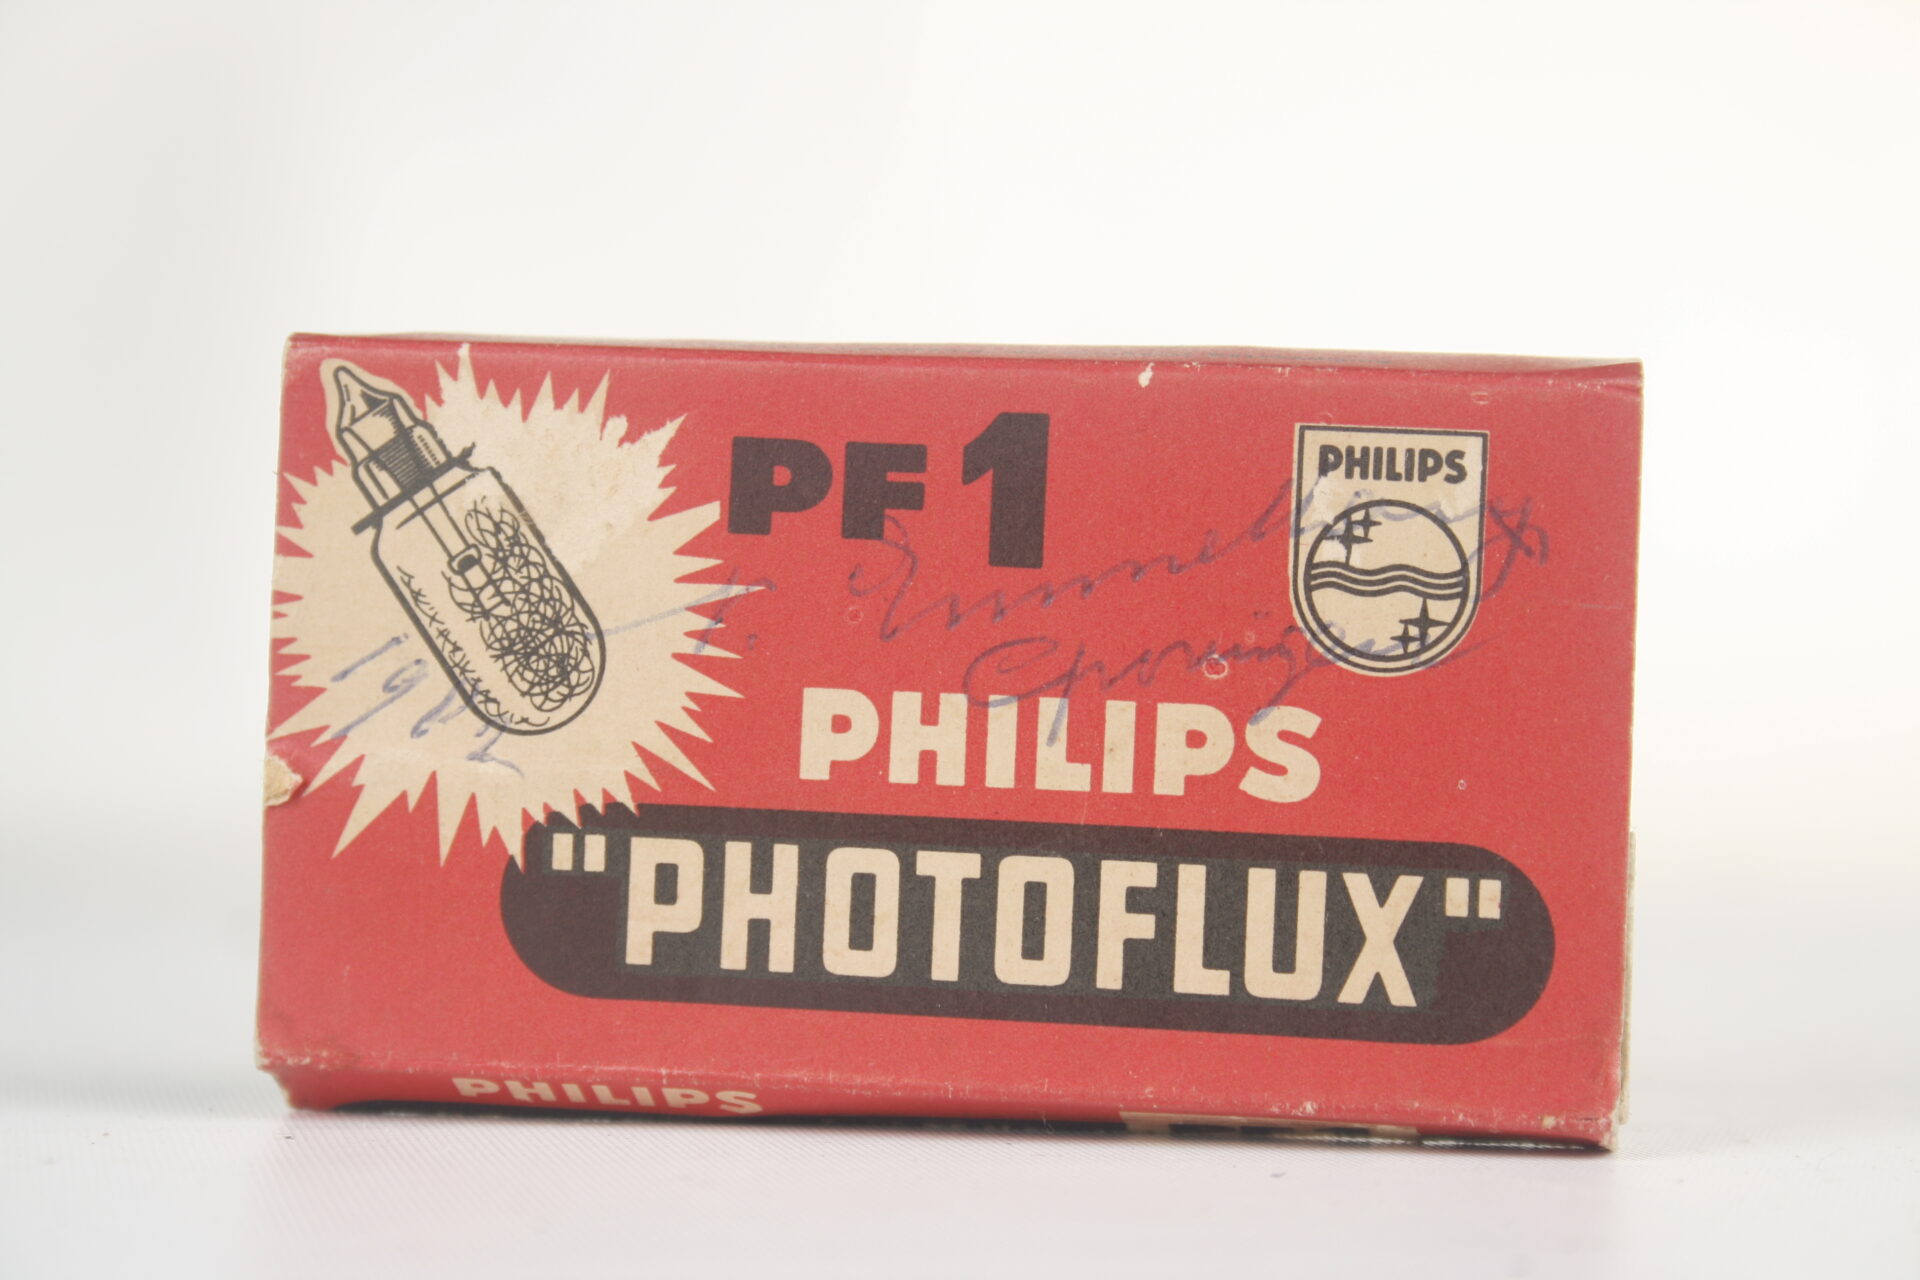 Philips Photoflux PF1 flitslampje